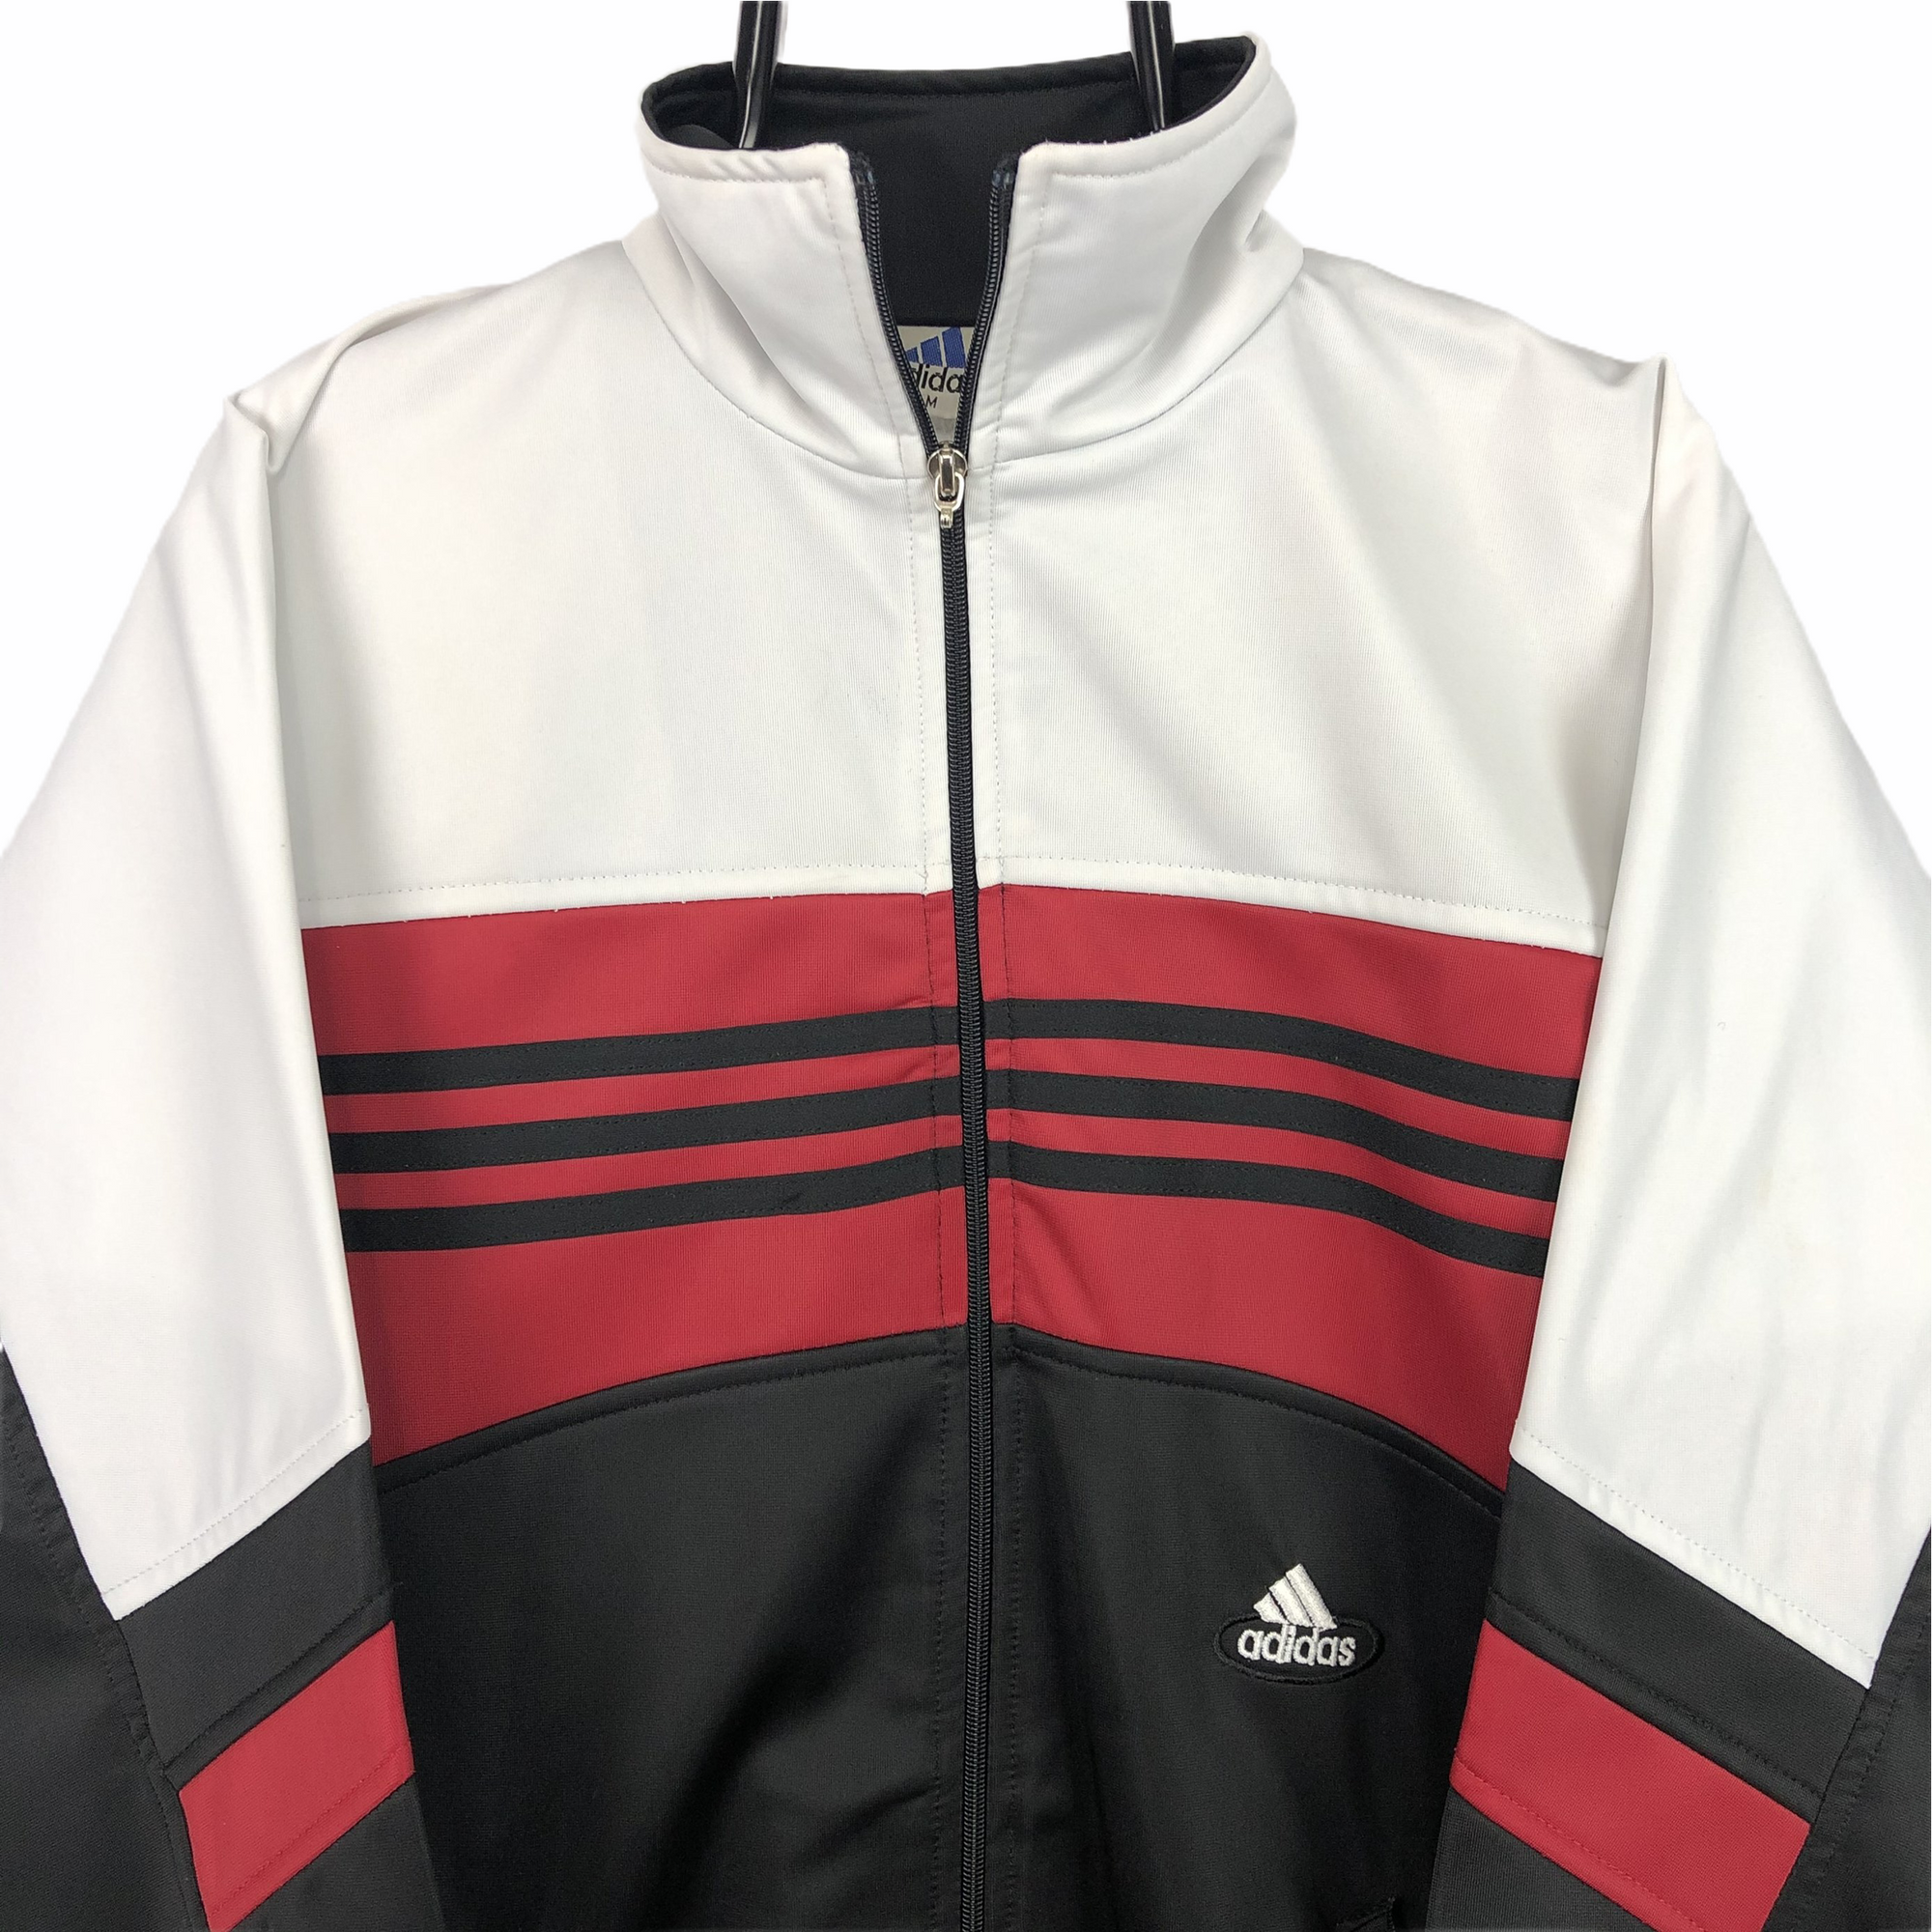 Vintage 90s Adidas Track Jacket in Red, White & Black - Men's Medium/Women's Large